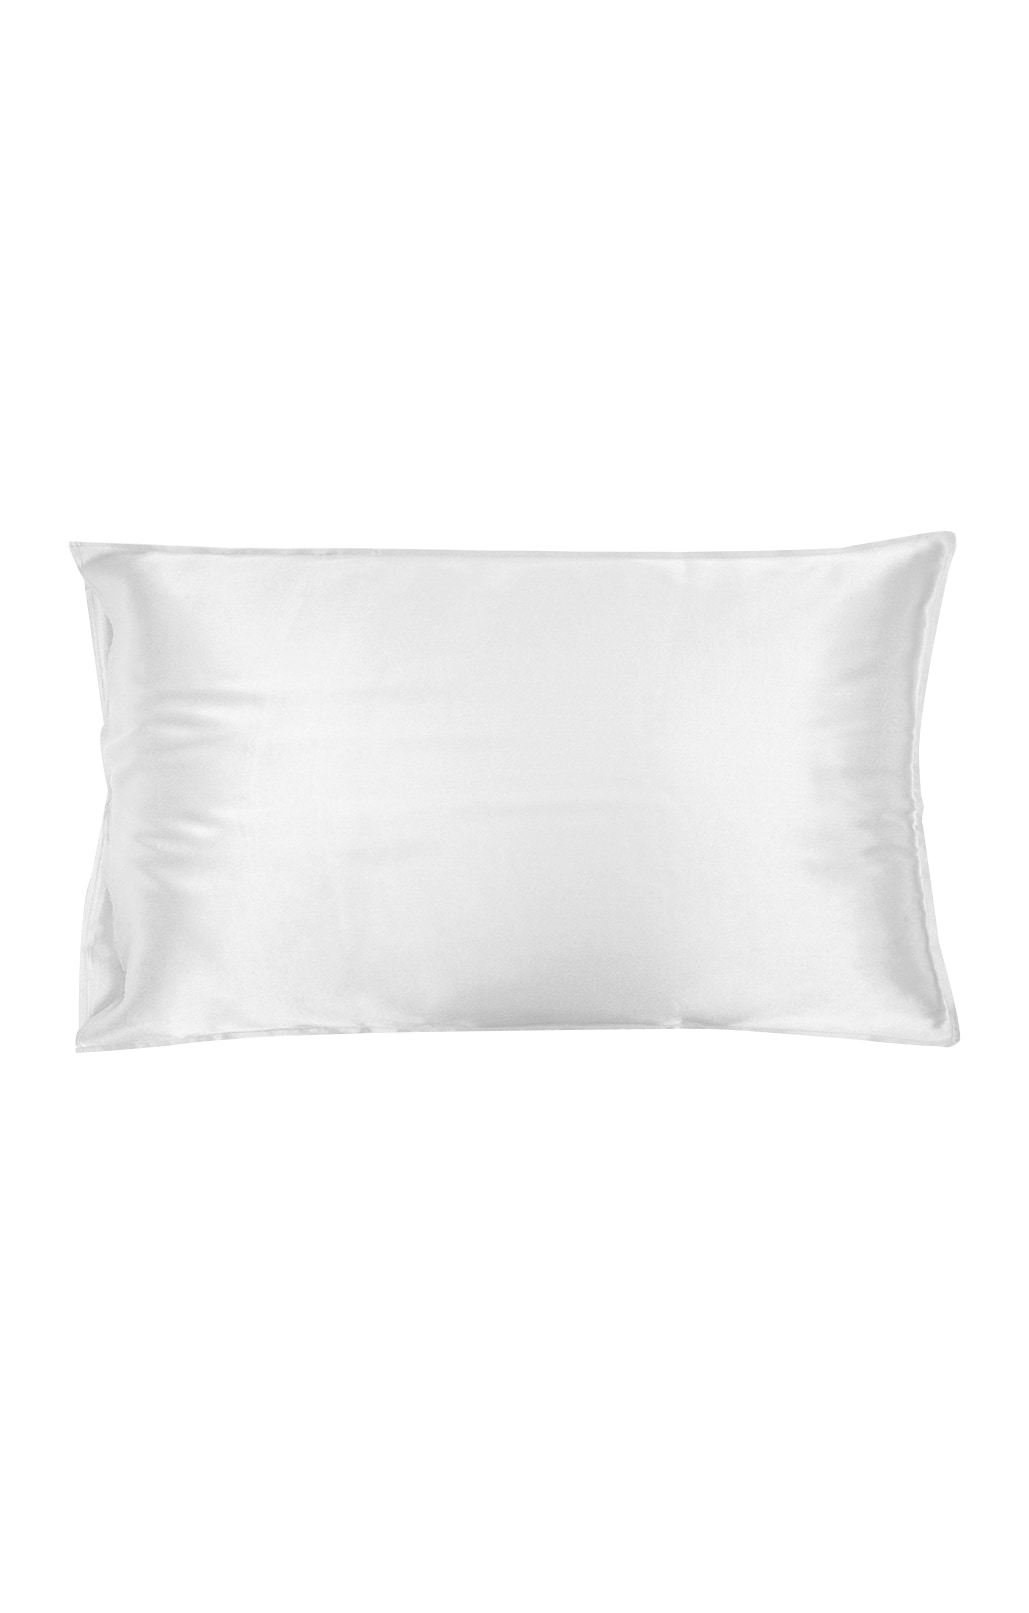 Silk pillowcase queen size light grey